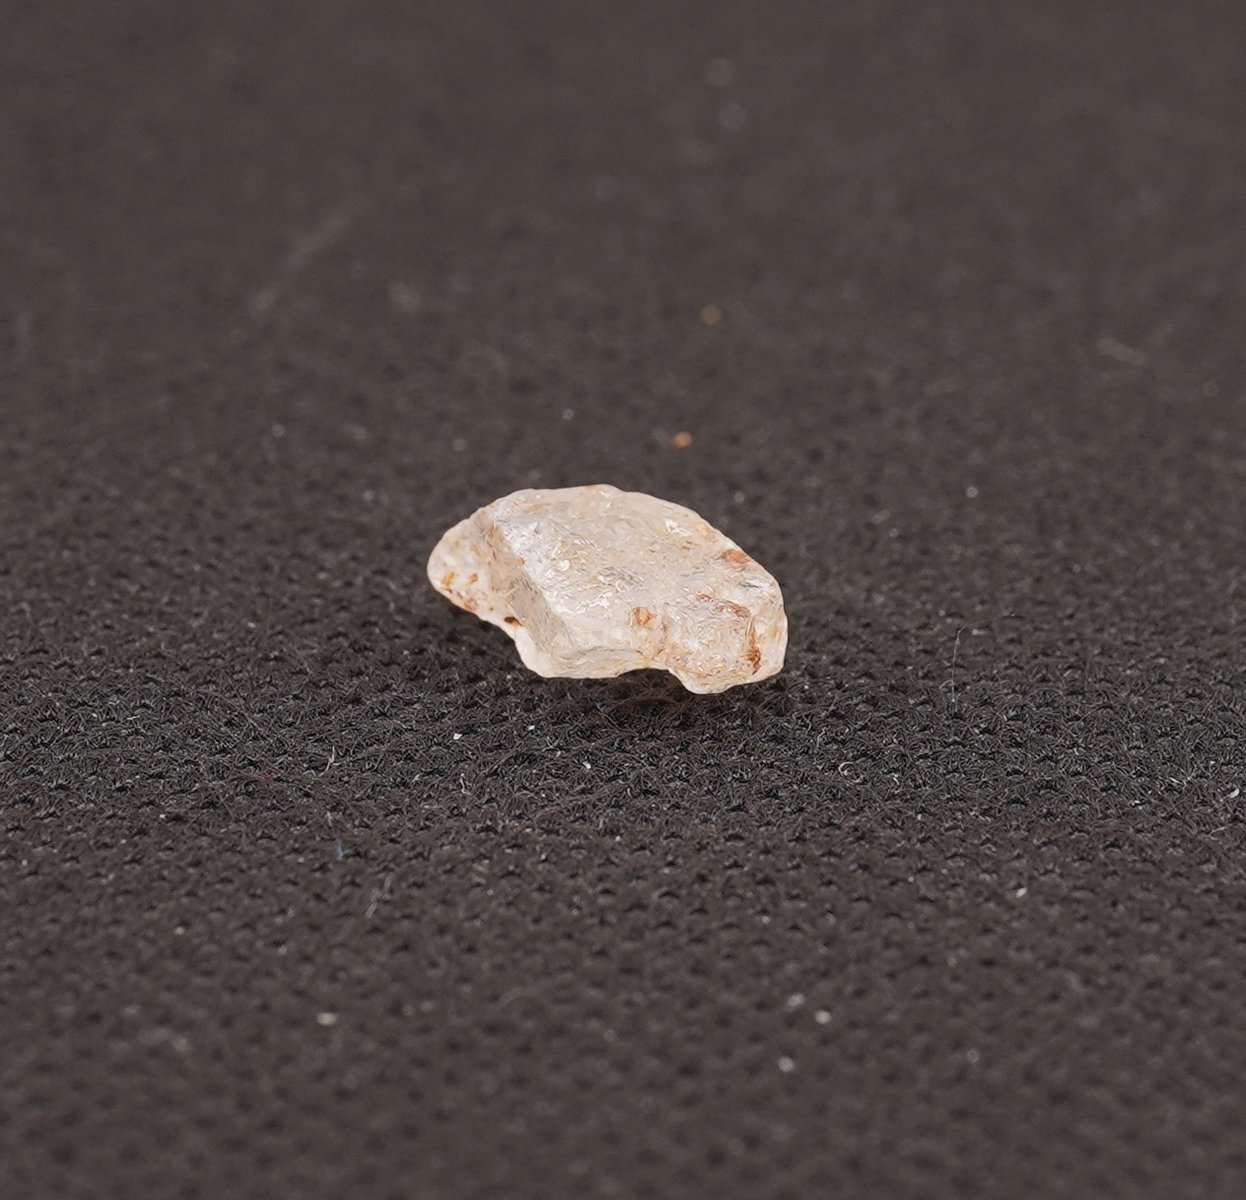 Fenacit nigerian cristal natural unicat f313